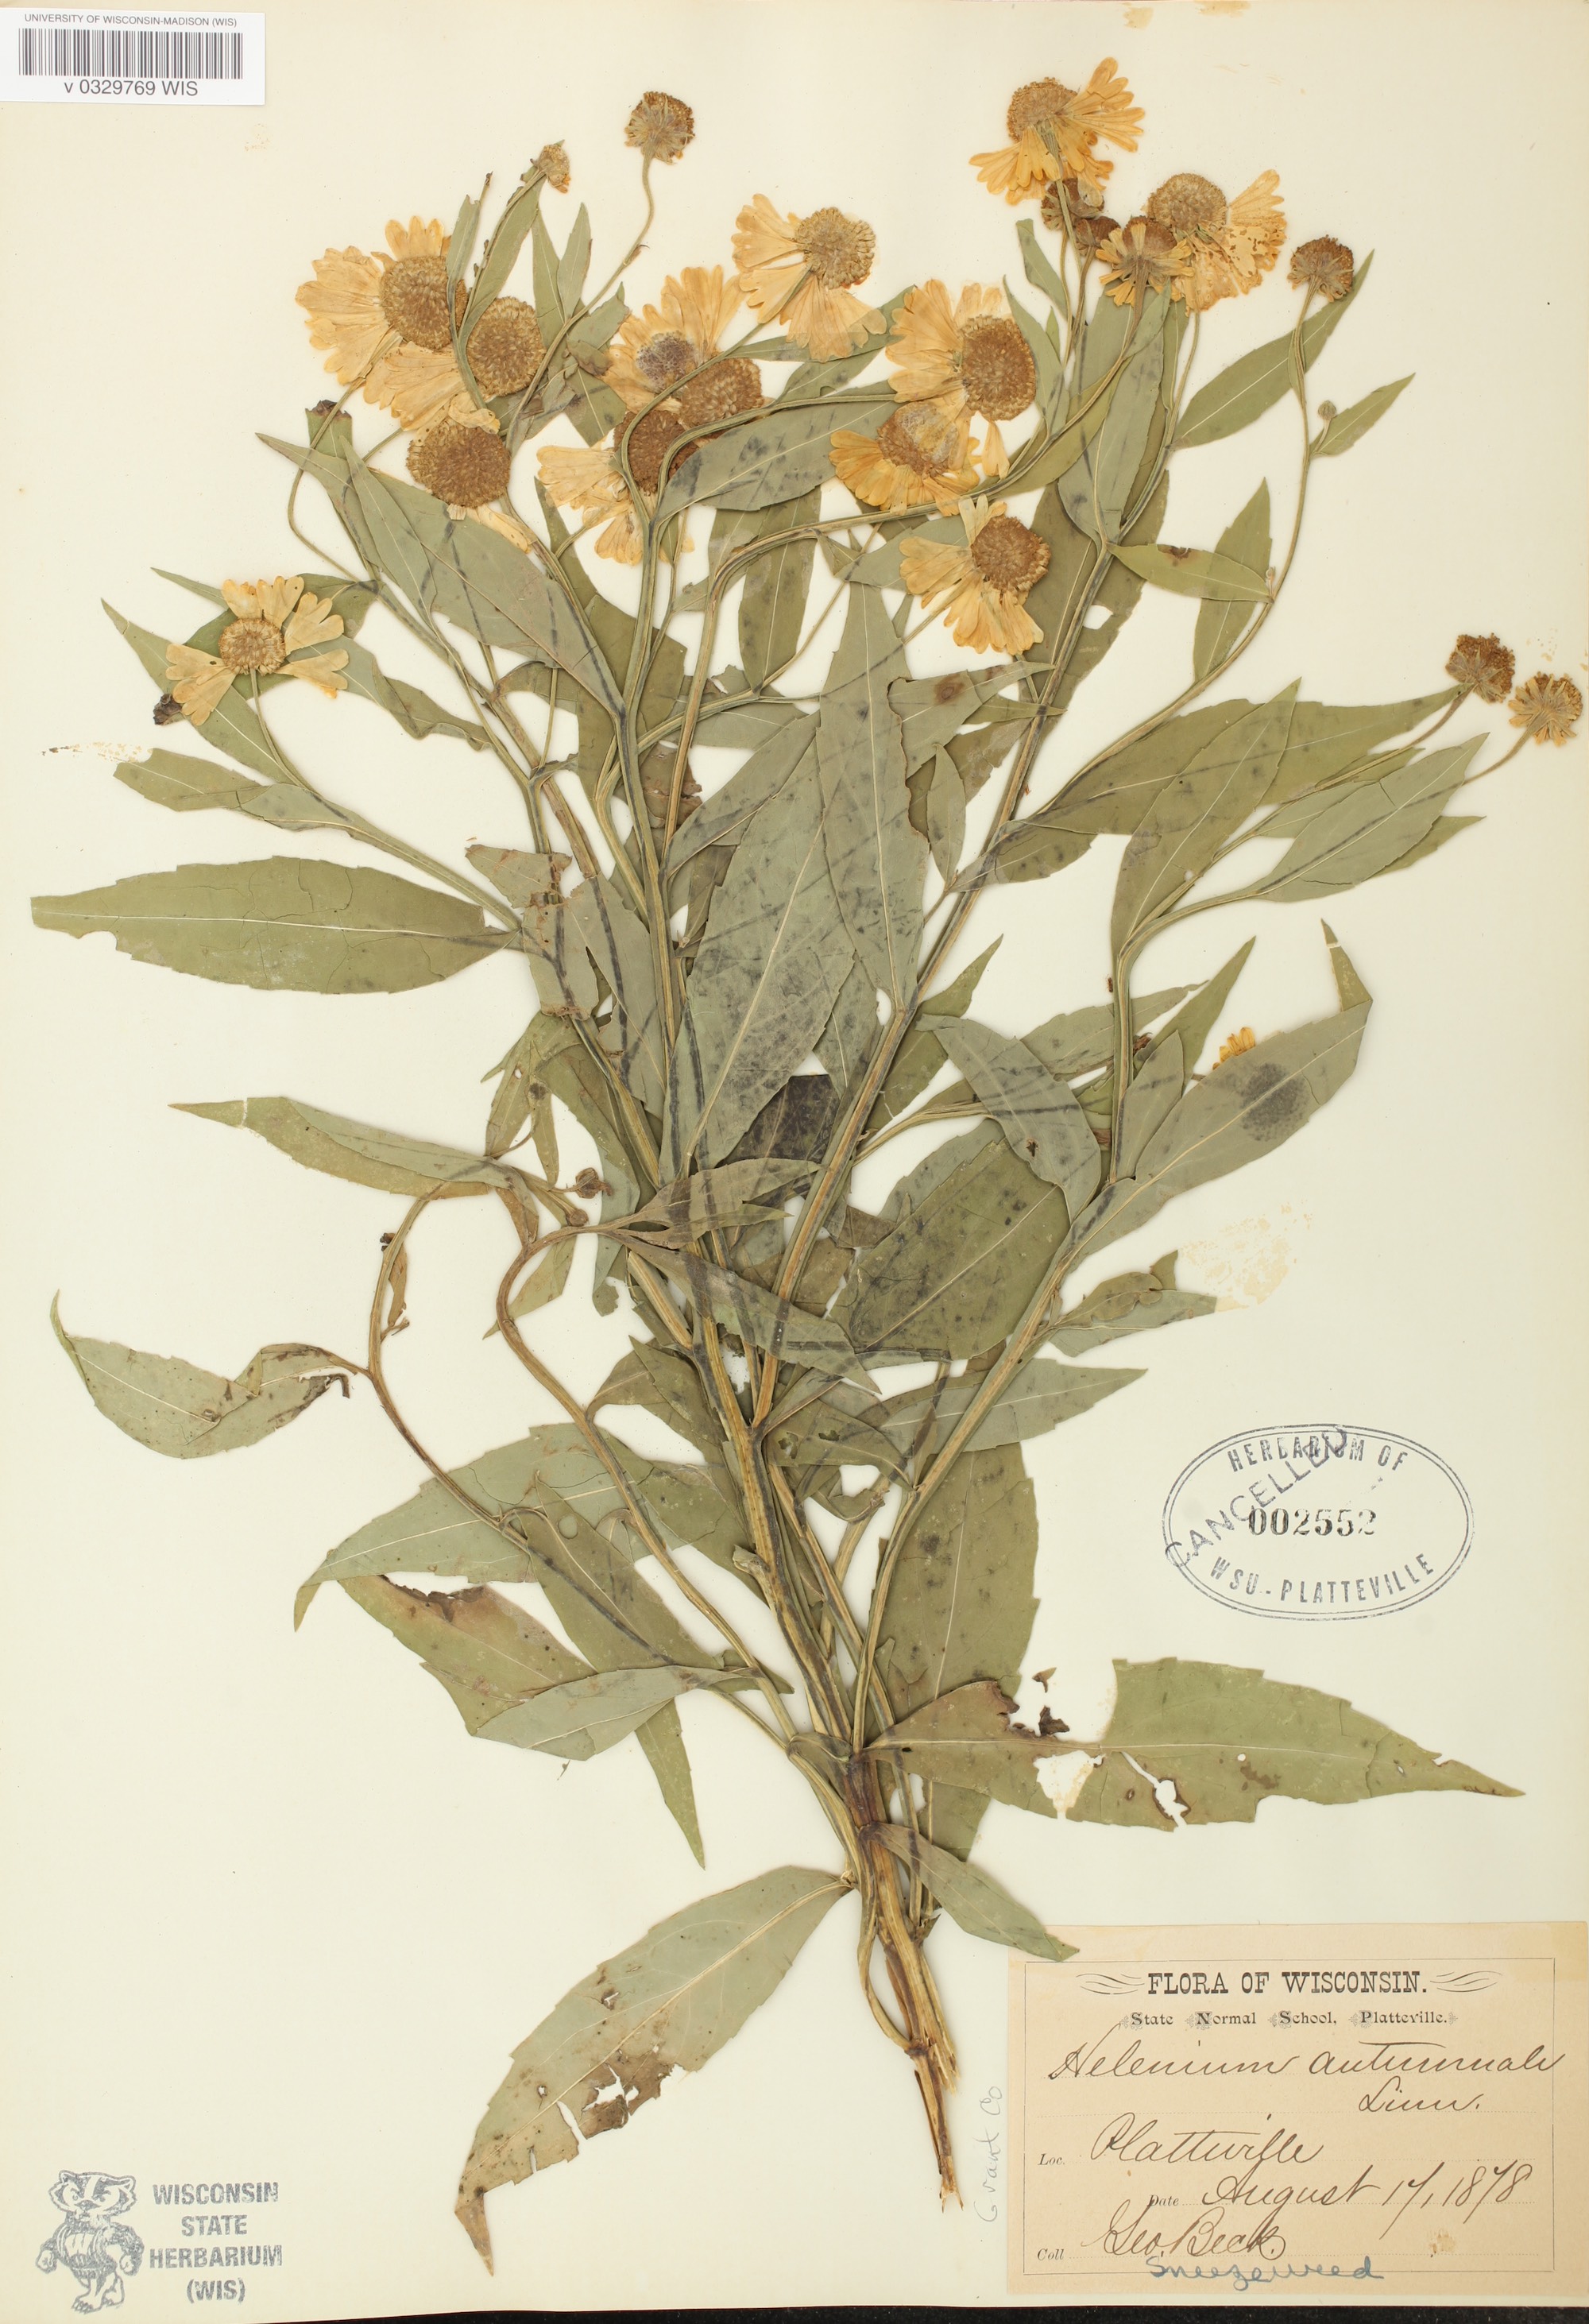 Common Sneezeweed specimen collected near Platteville, Wisconsin on August 17, 1878.